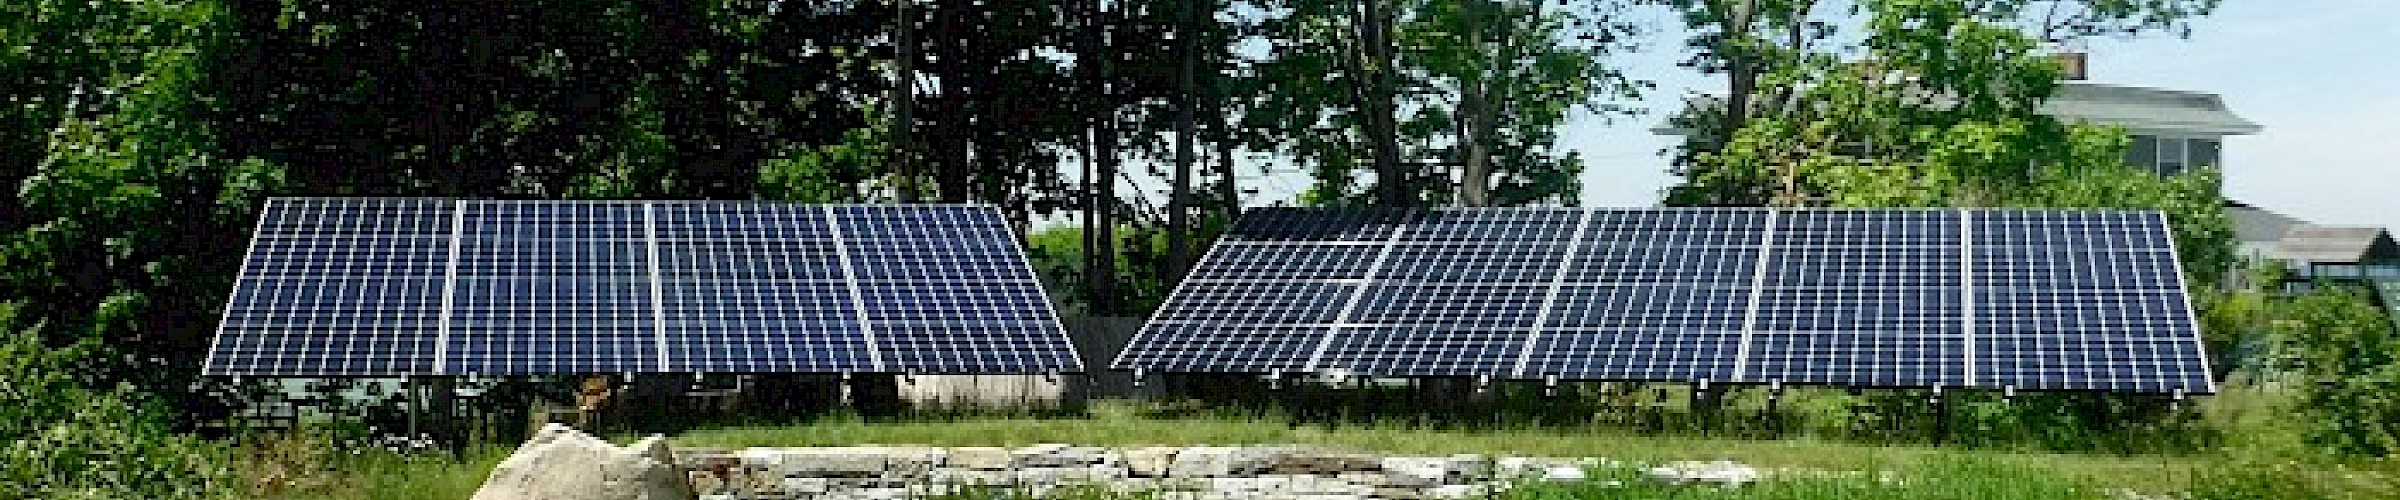 12.60 kW Solar Installation in Nahant, MA